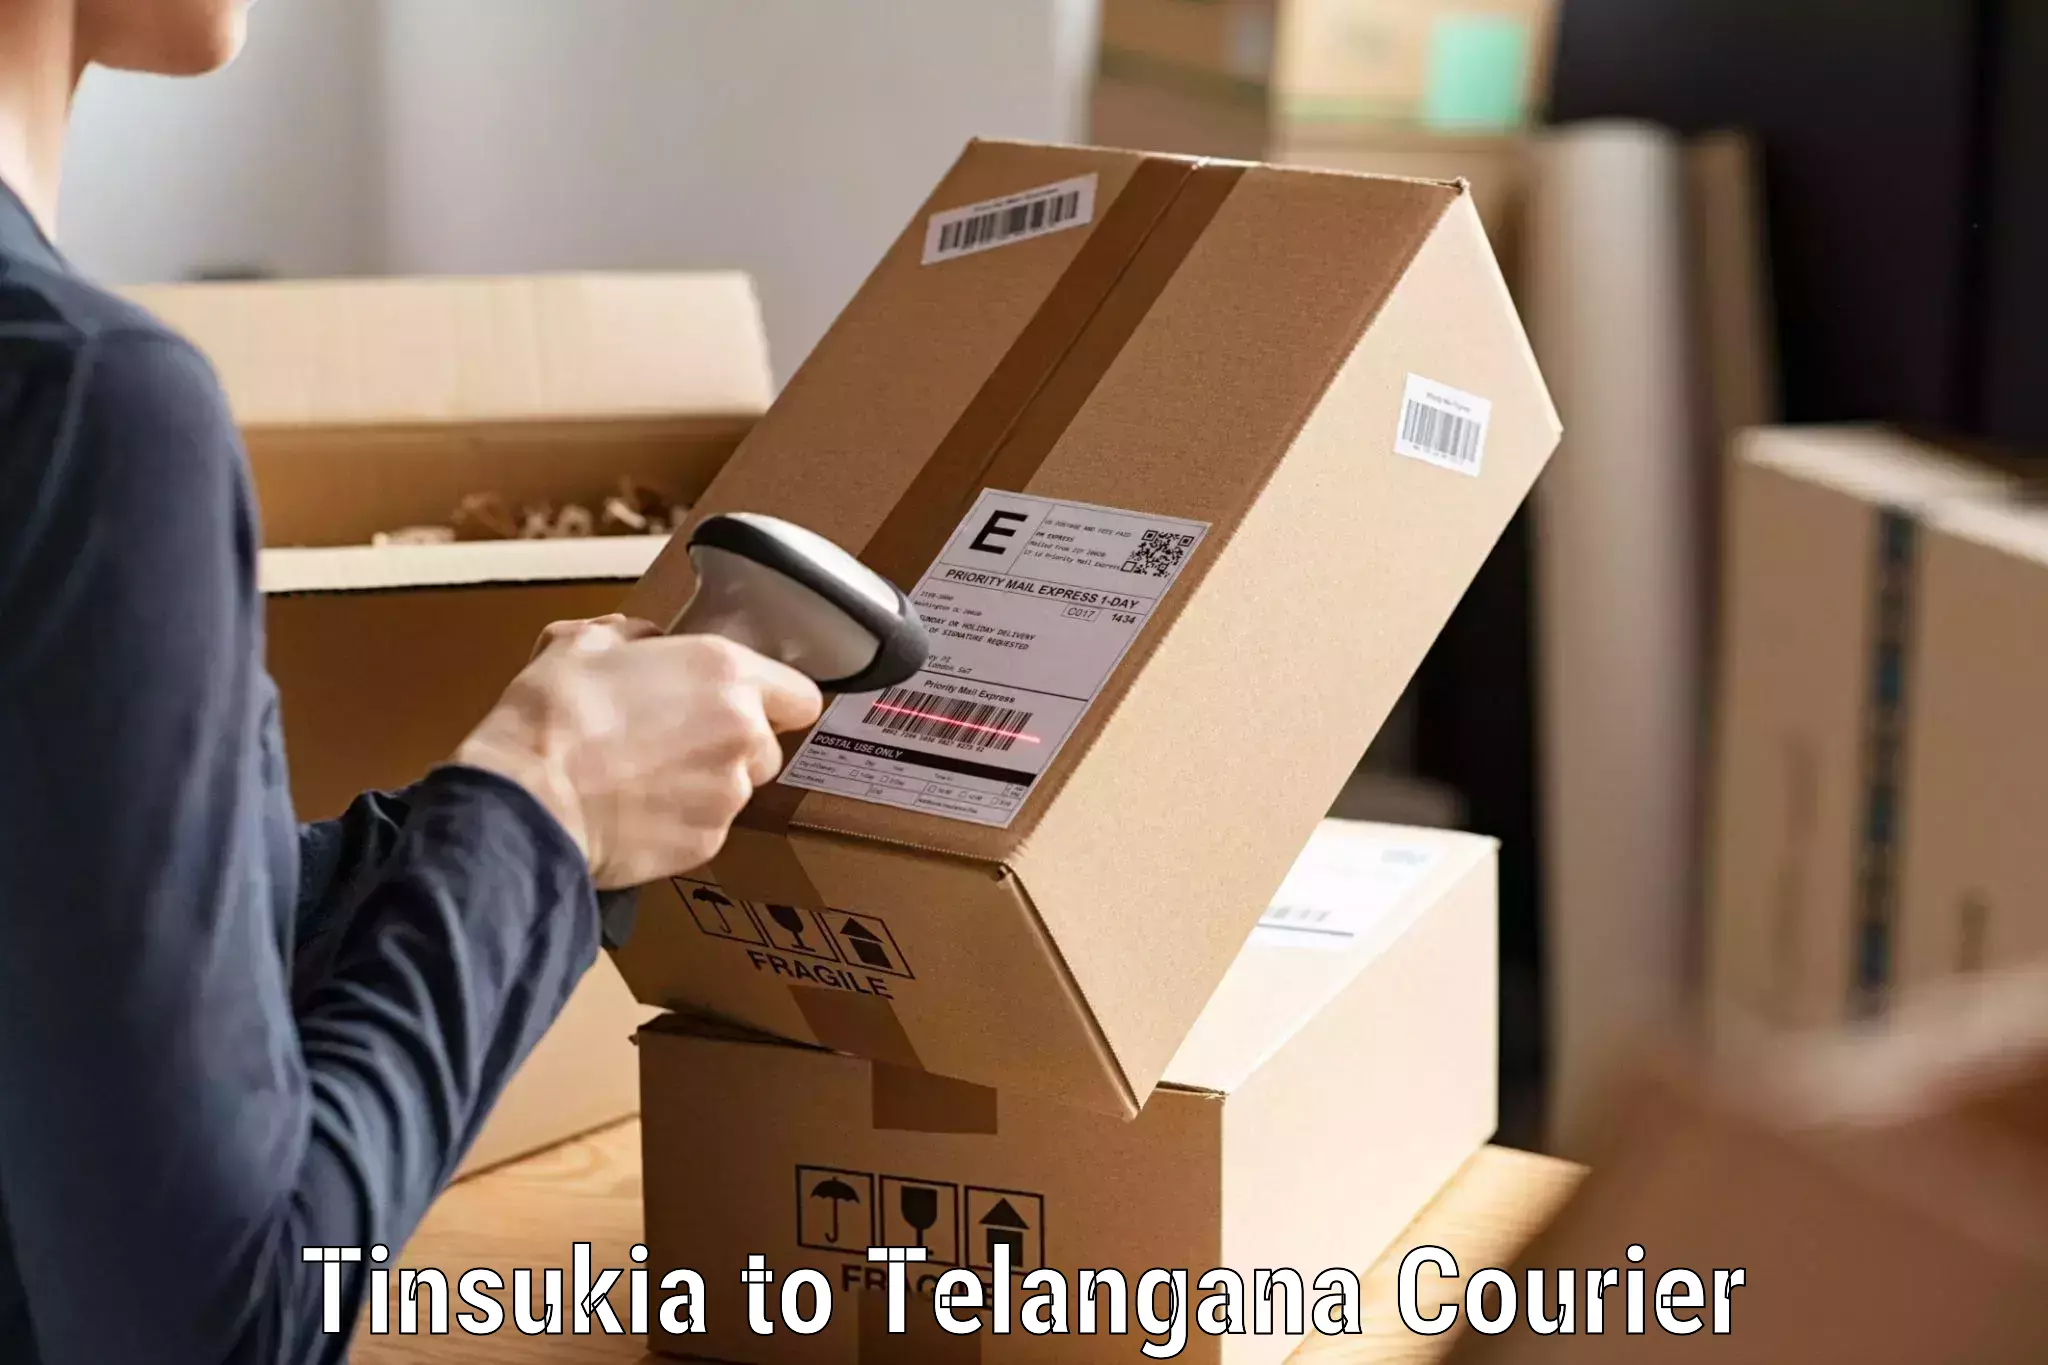 Delivery service partnership Tinsukia to Rangareddy